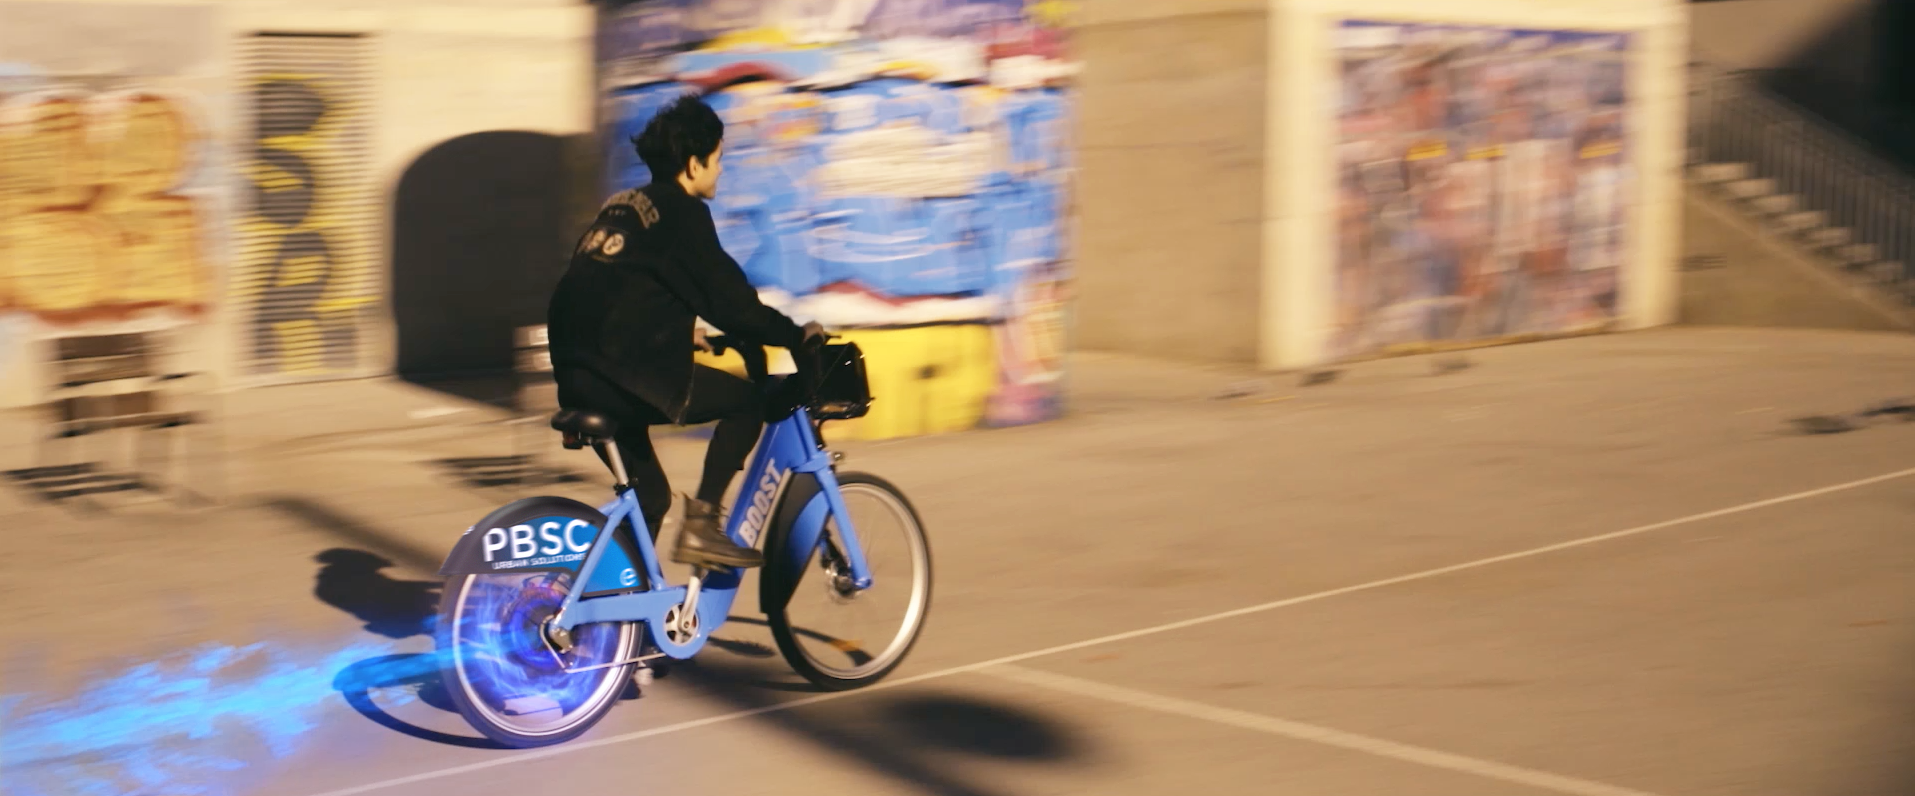 PBSC to supply Barcelona bike-share scheme with 1,000 e-Bikes